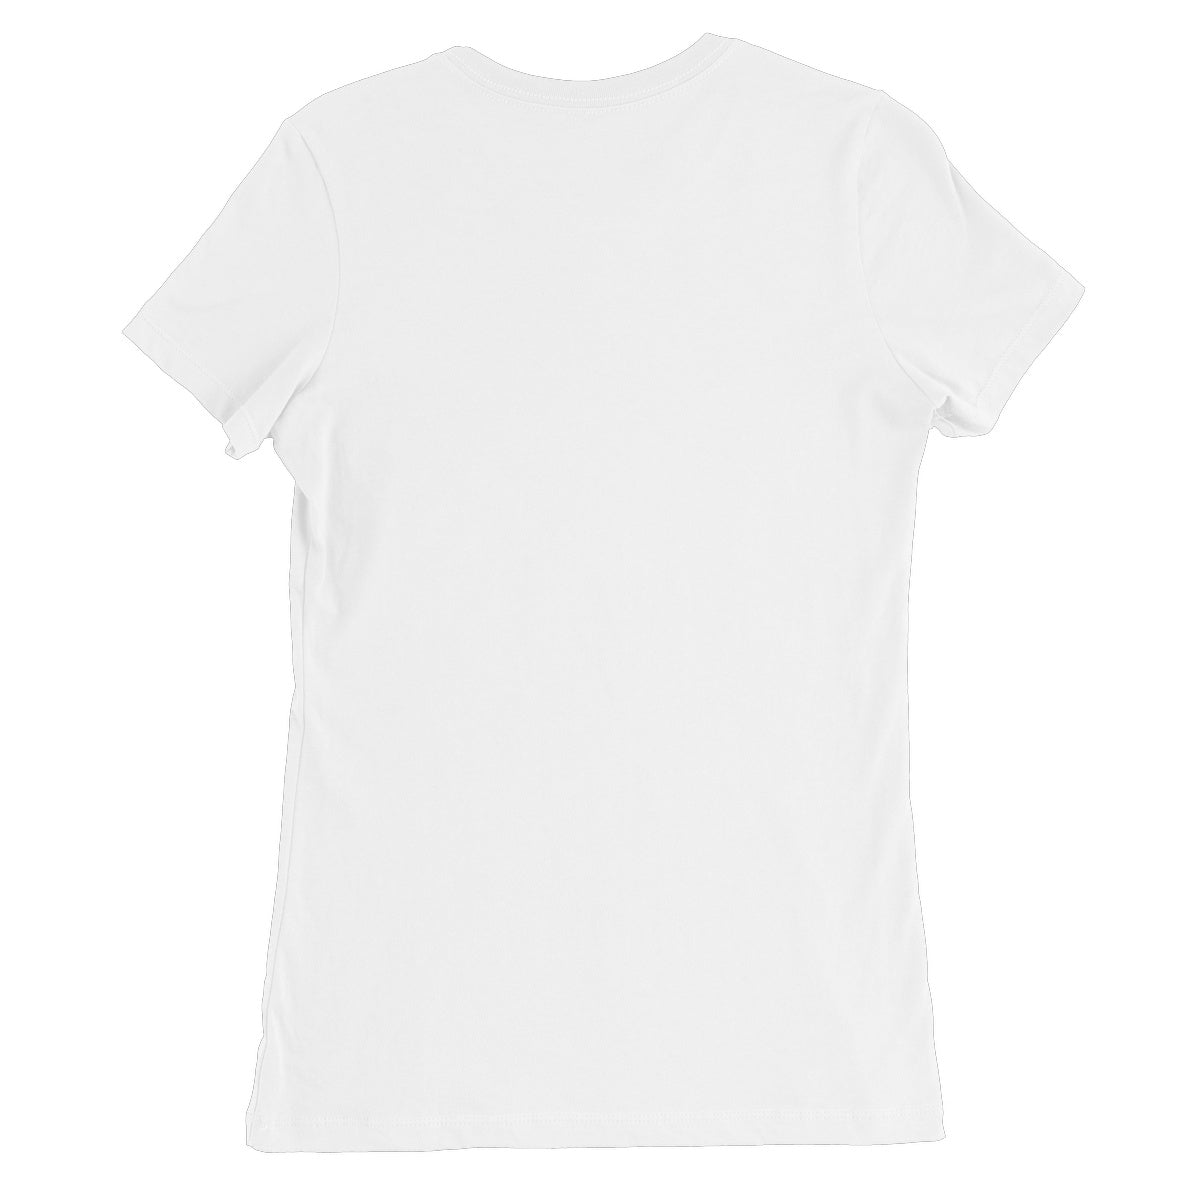 Da Vinci Vitruvian Man Melodeon Women's T-Shirt